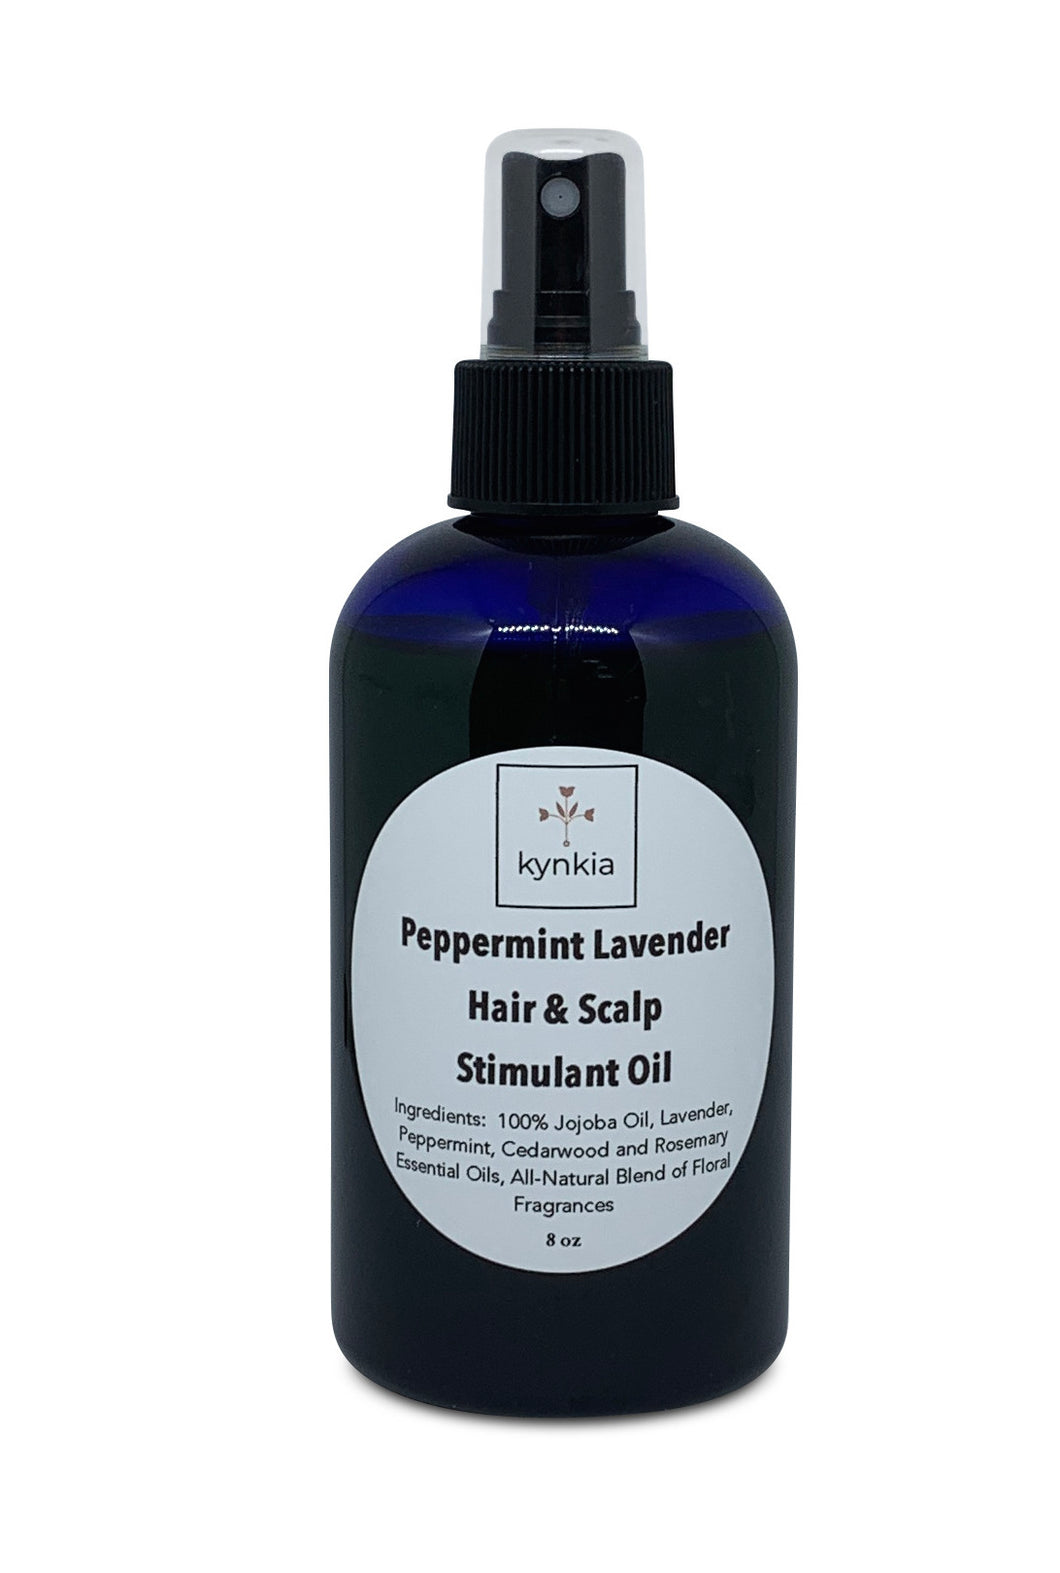 Peppermint Lavender Hair & Scalp Stimulant Oil - 8 oz